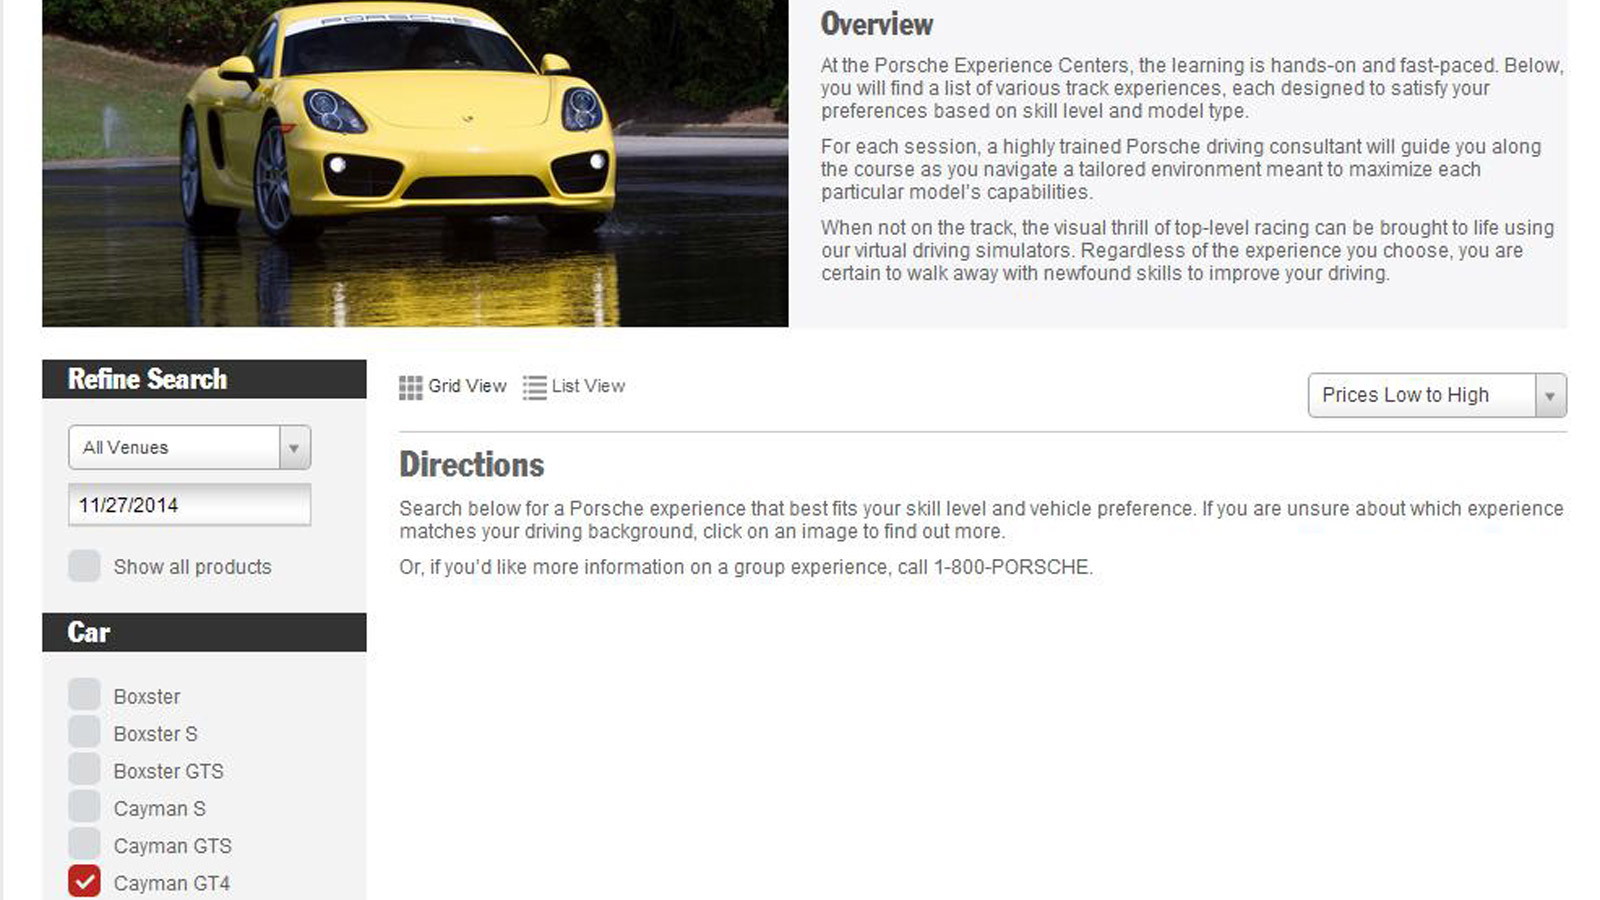 Porsche Cayman GT4 on list of eligible cars on Porsche Driving Experience website